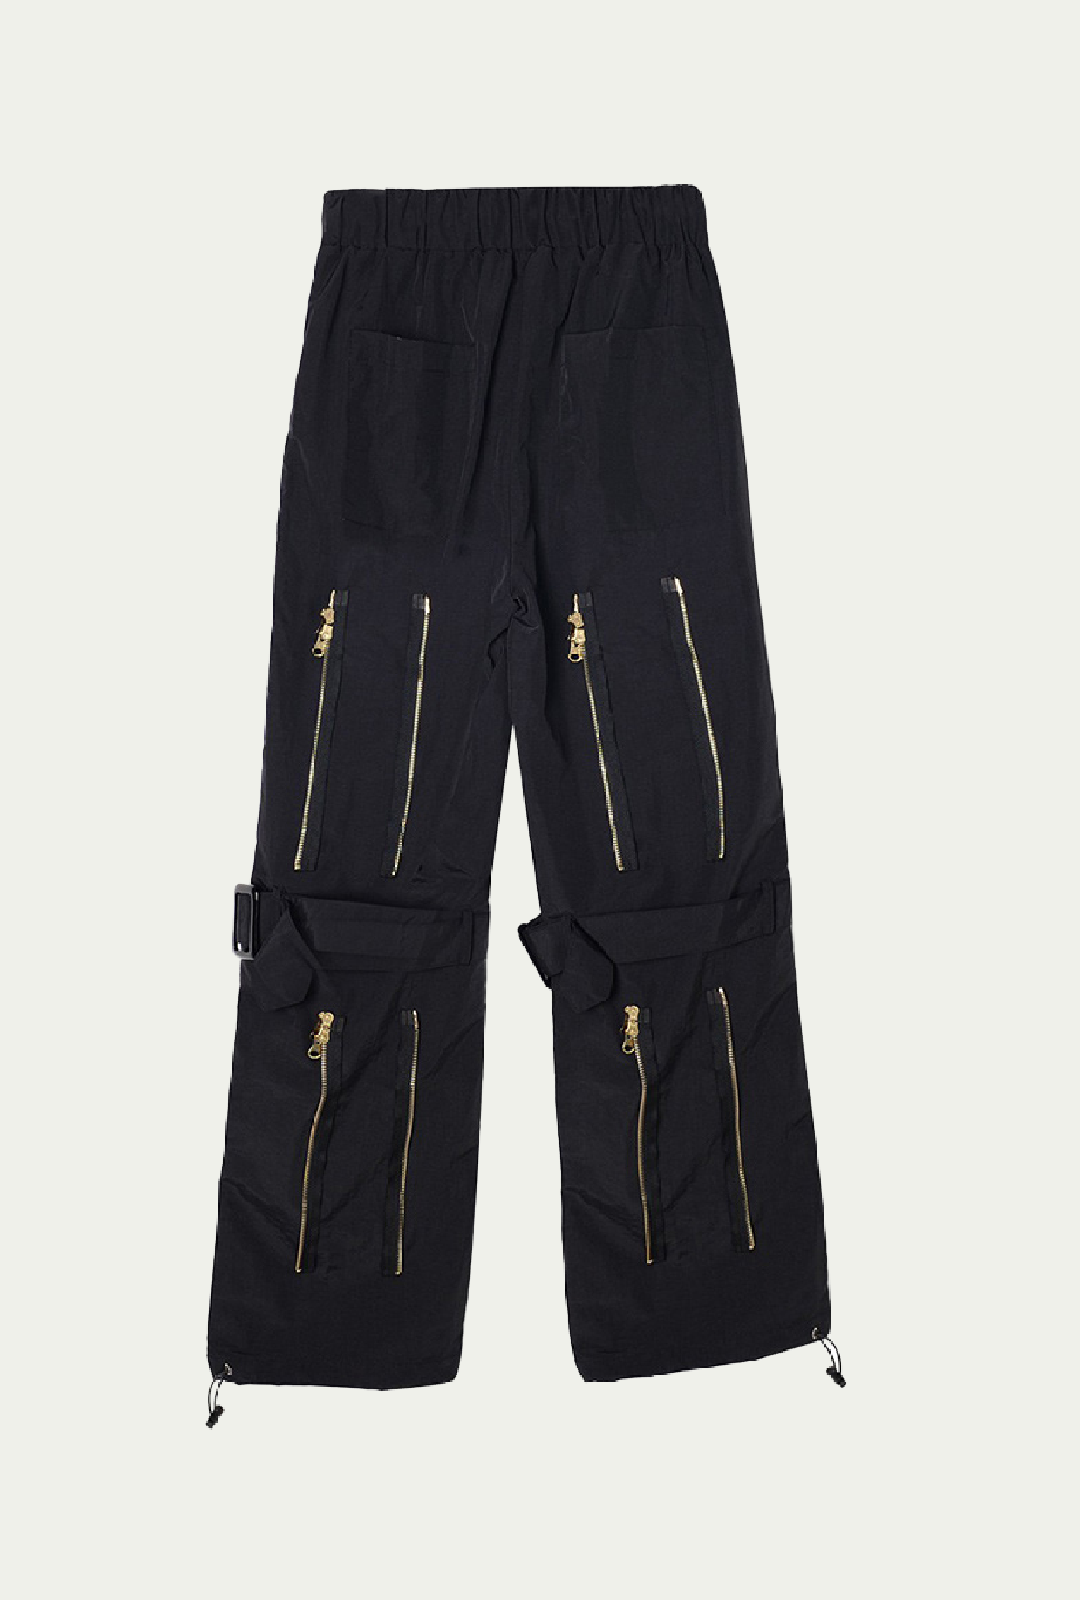 Max Zipper Trousers